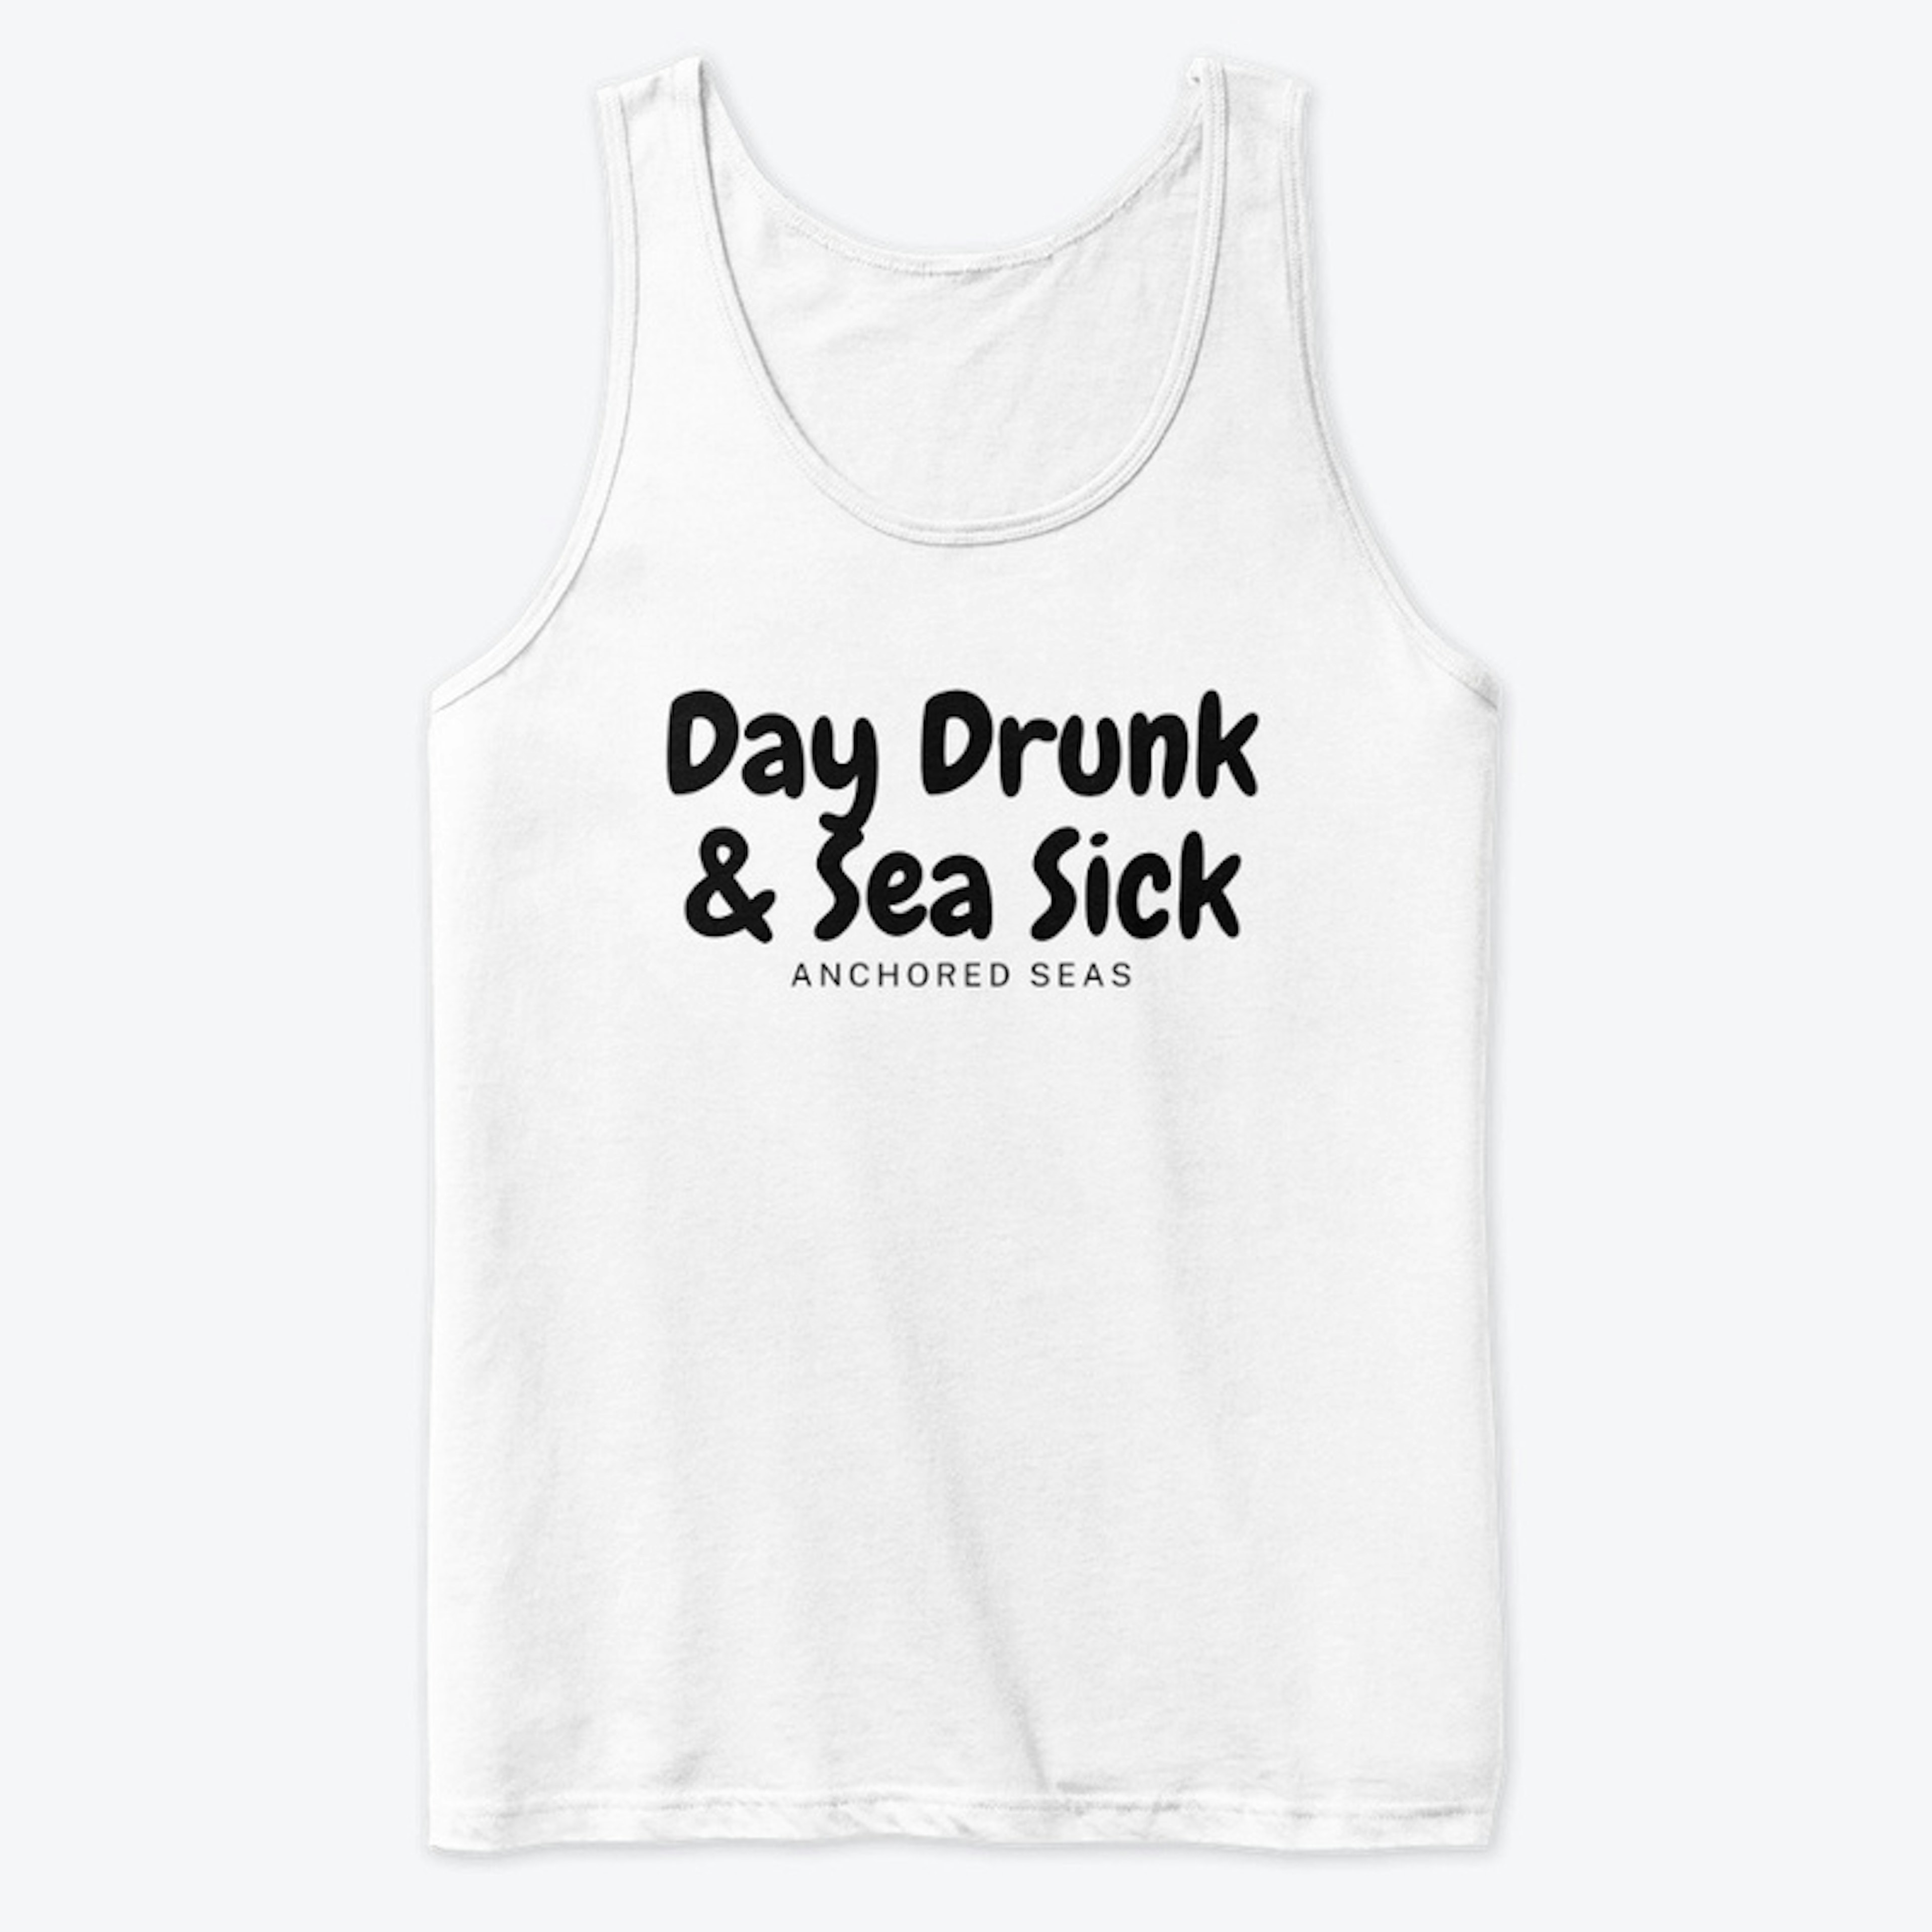 Day drunk & sea sick